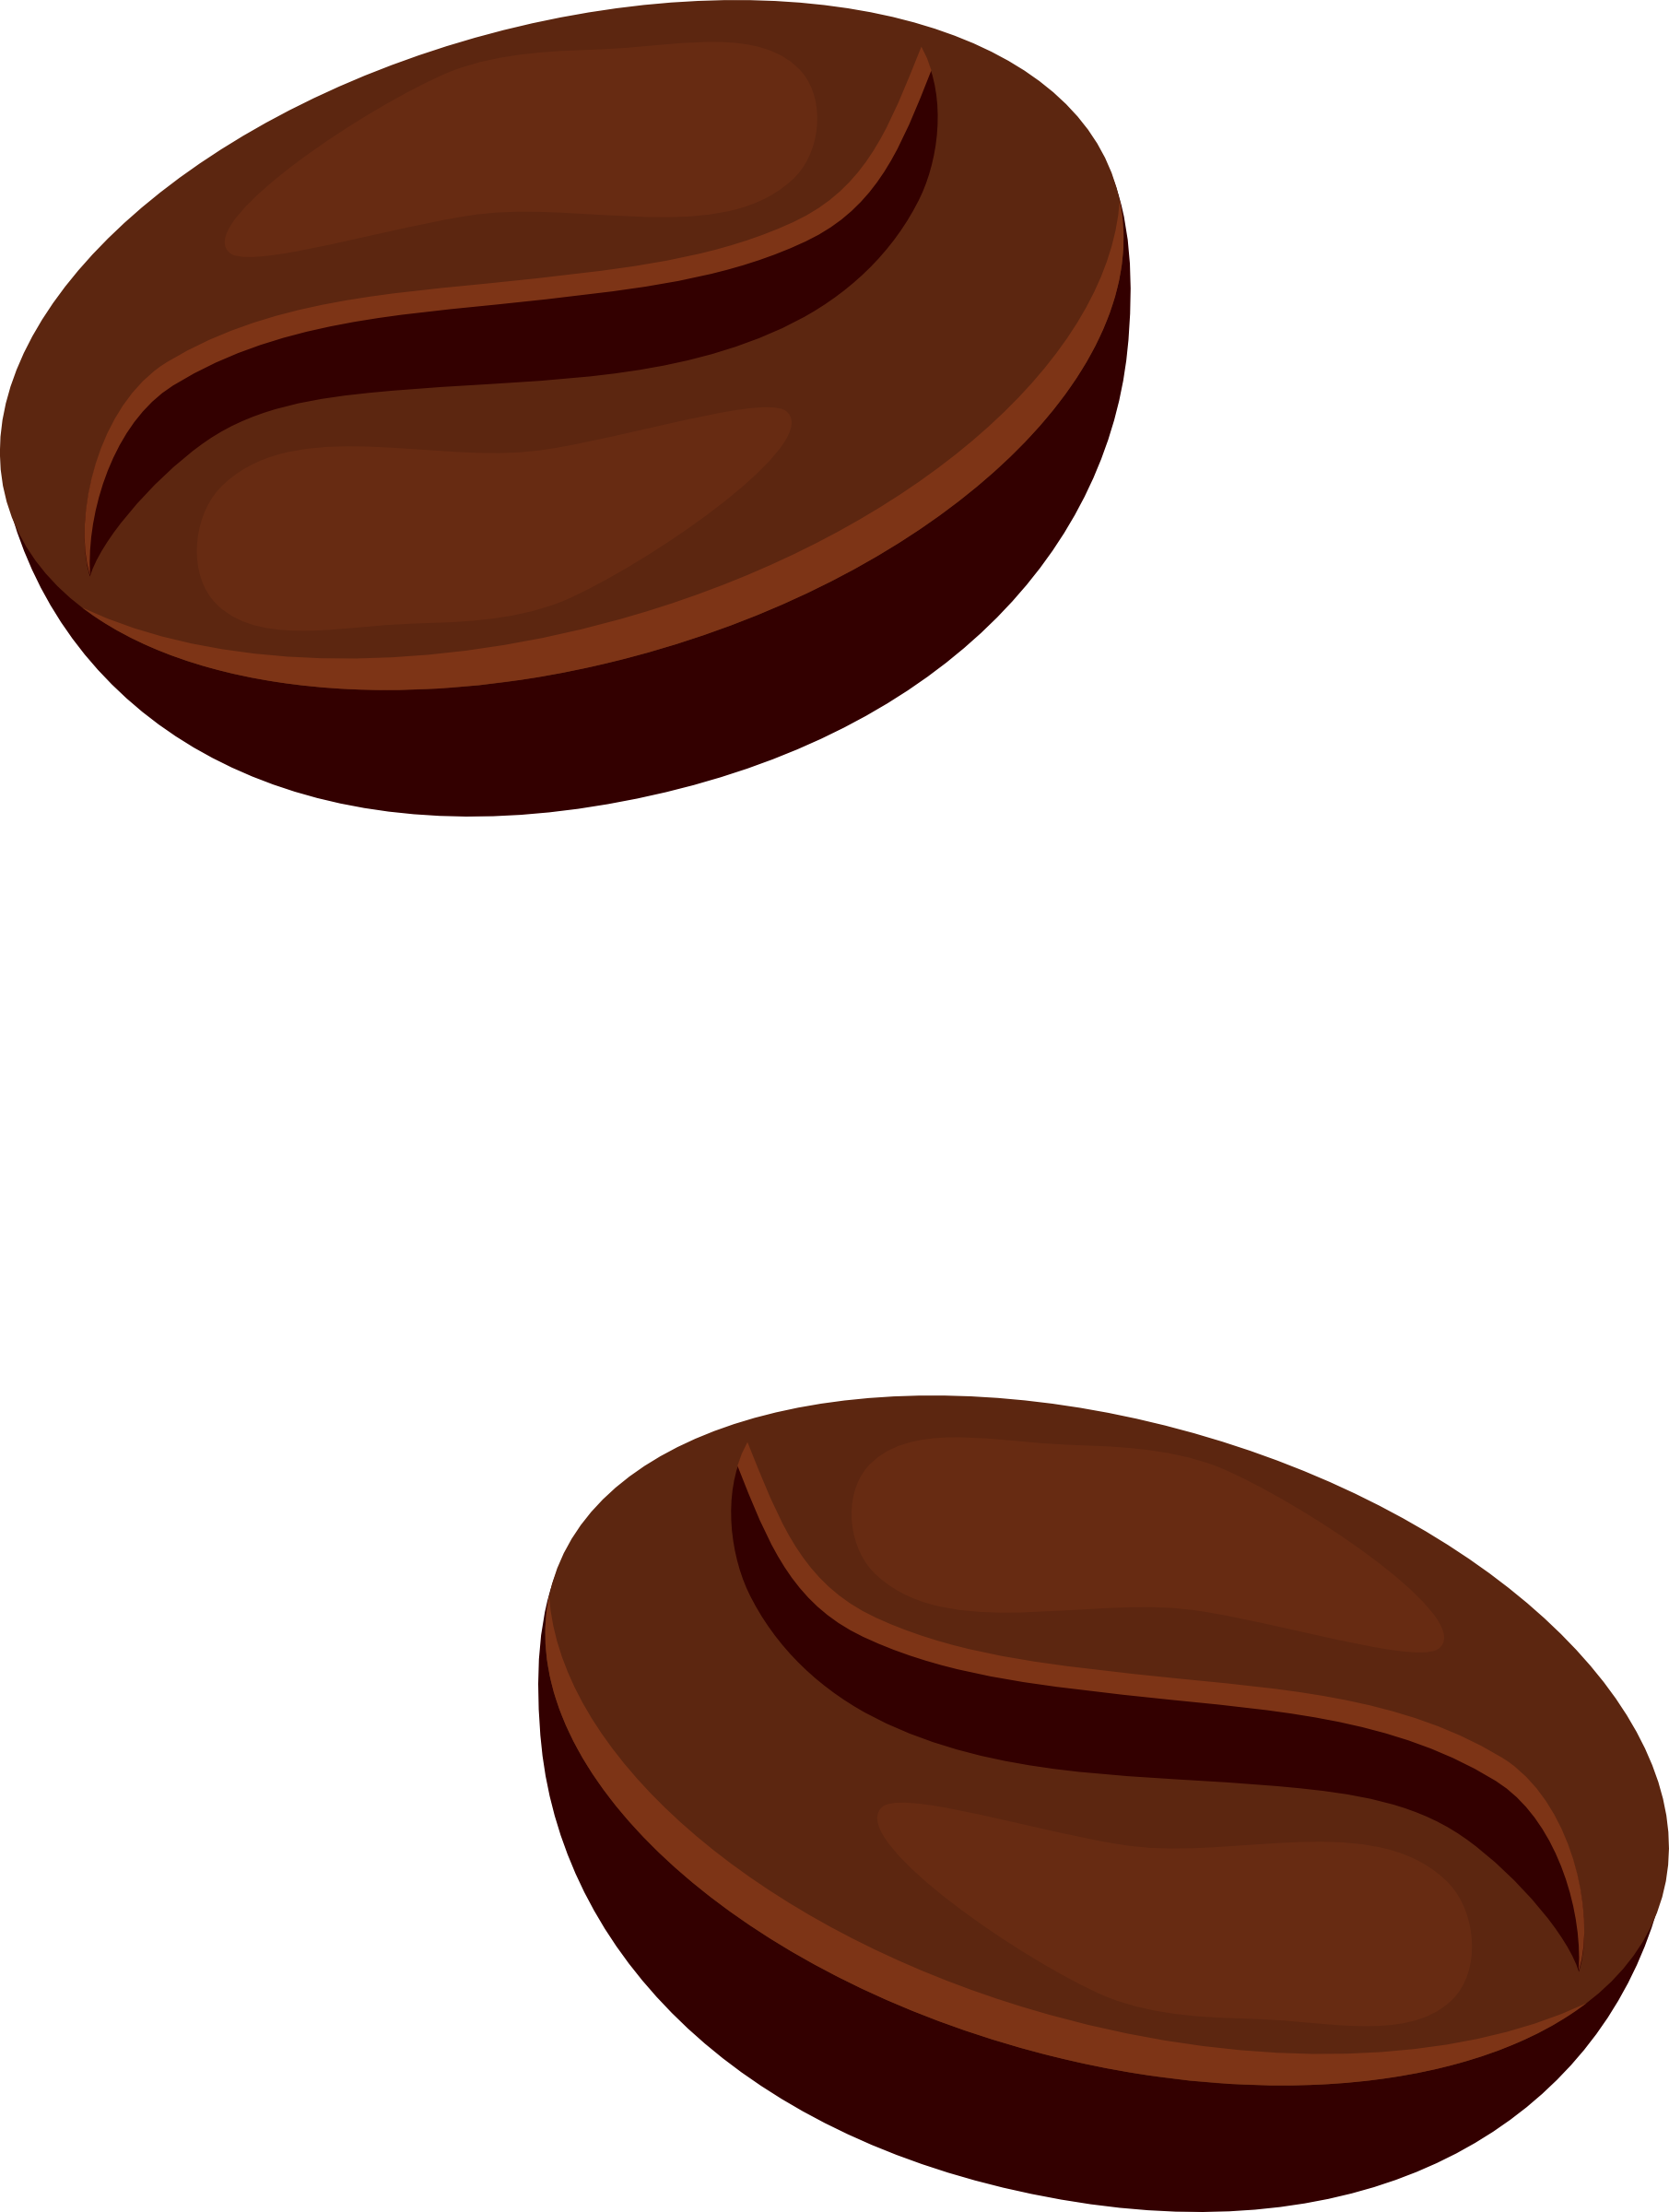 Coffee Beans Clipart.